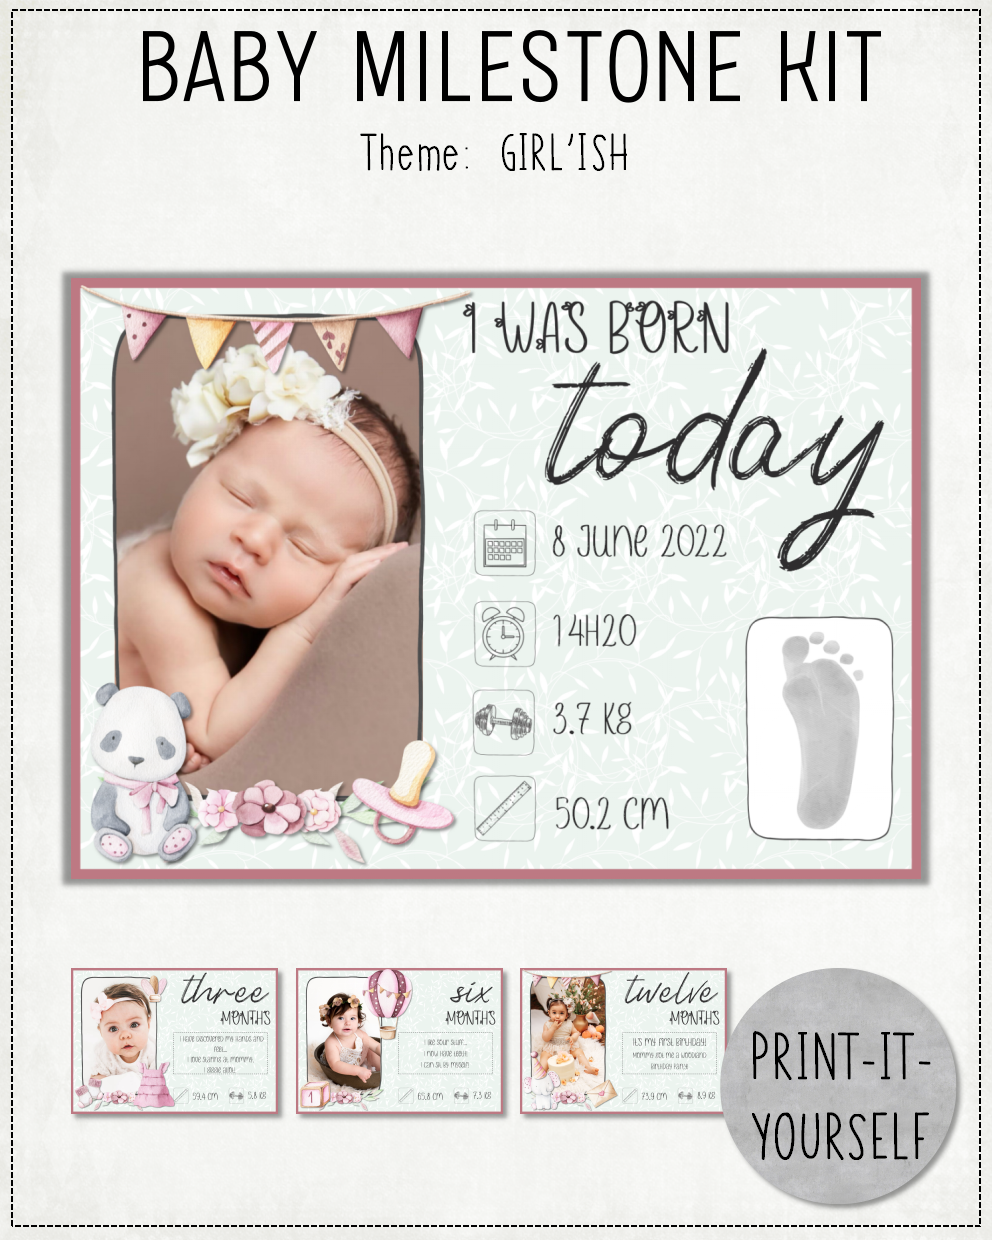 PRINT-IT-YOURSELF KIT:  Baby Milestones - Custom Design (choose your own theme)